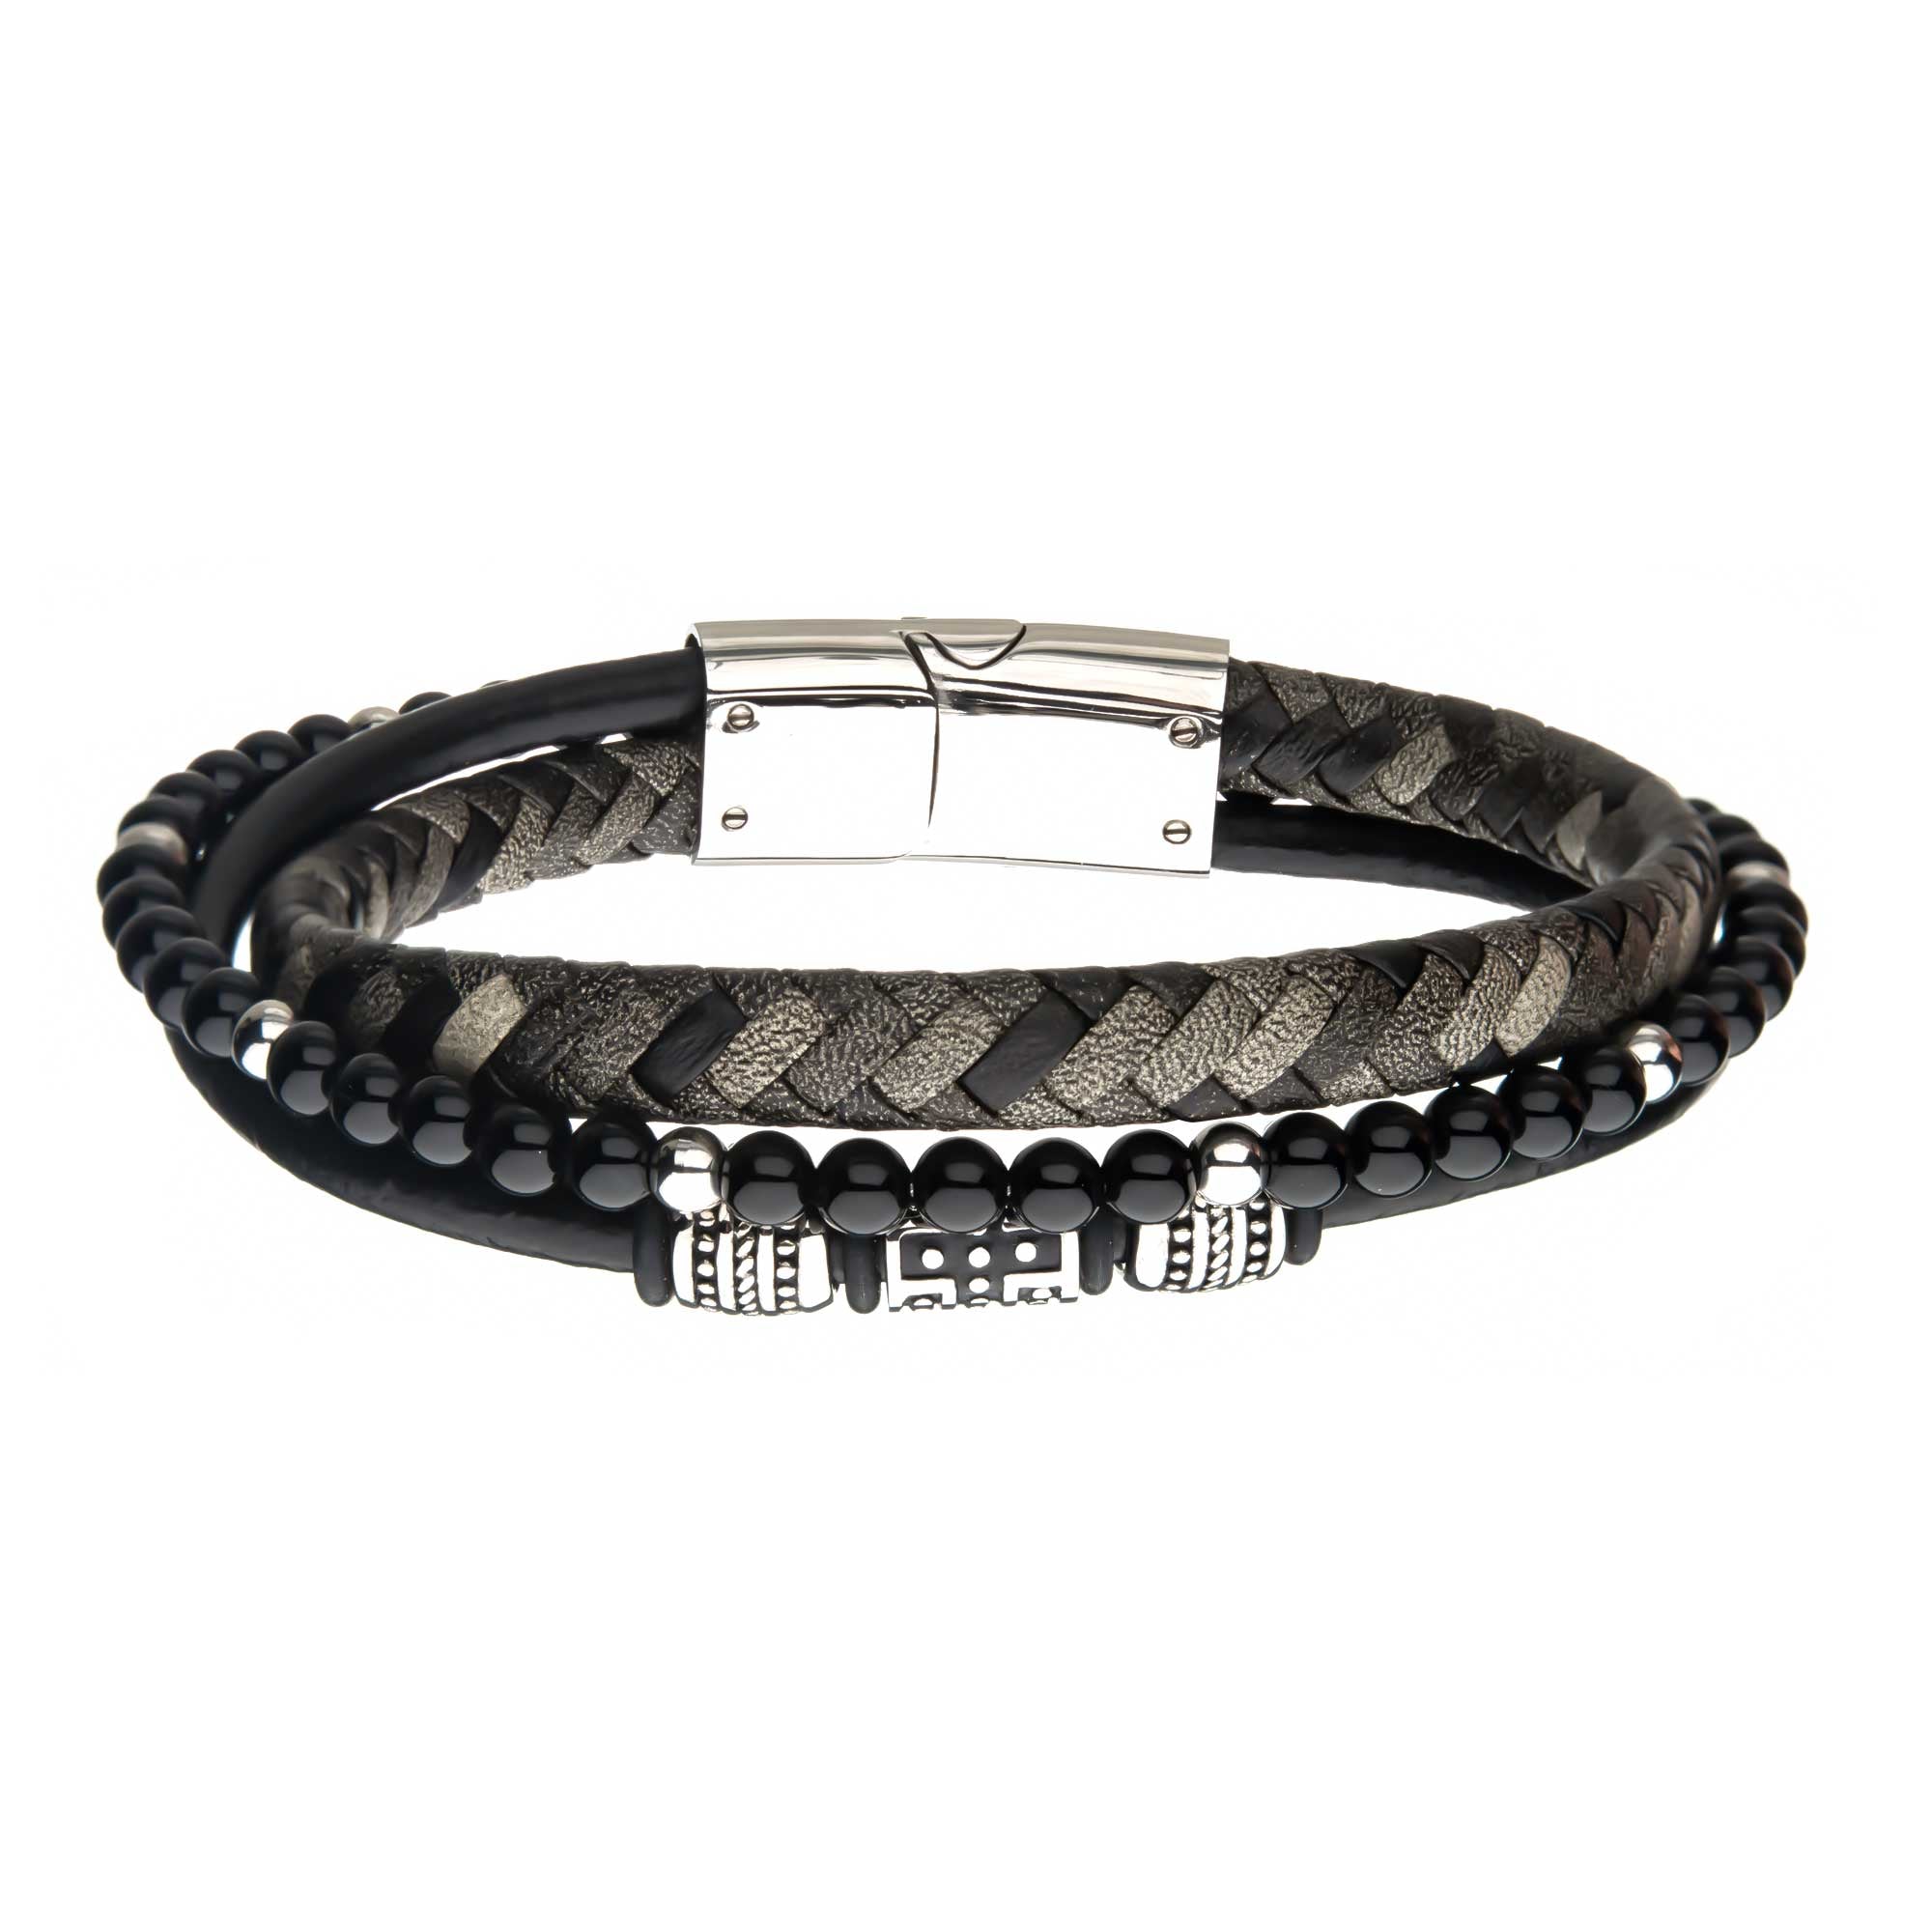 Black Onyx Beads with Black Braided Leather Layered Bracelet